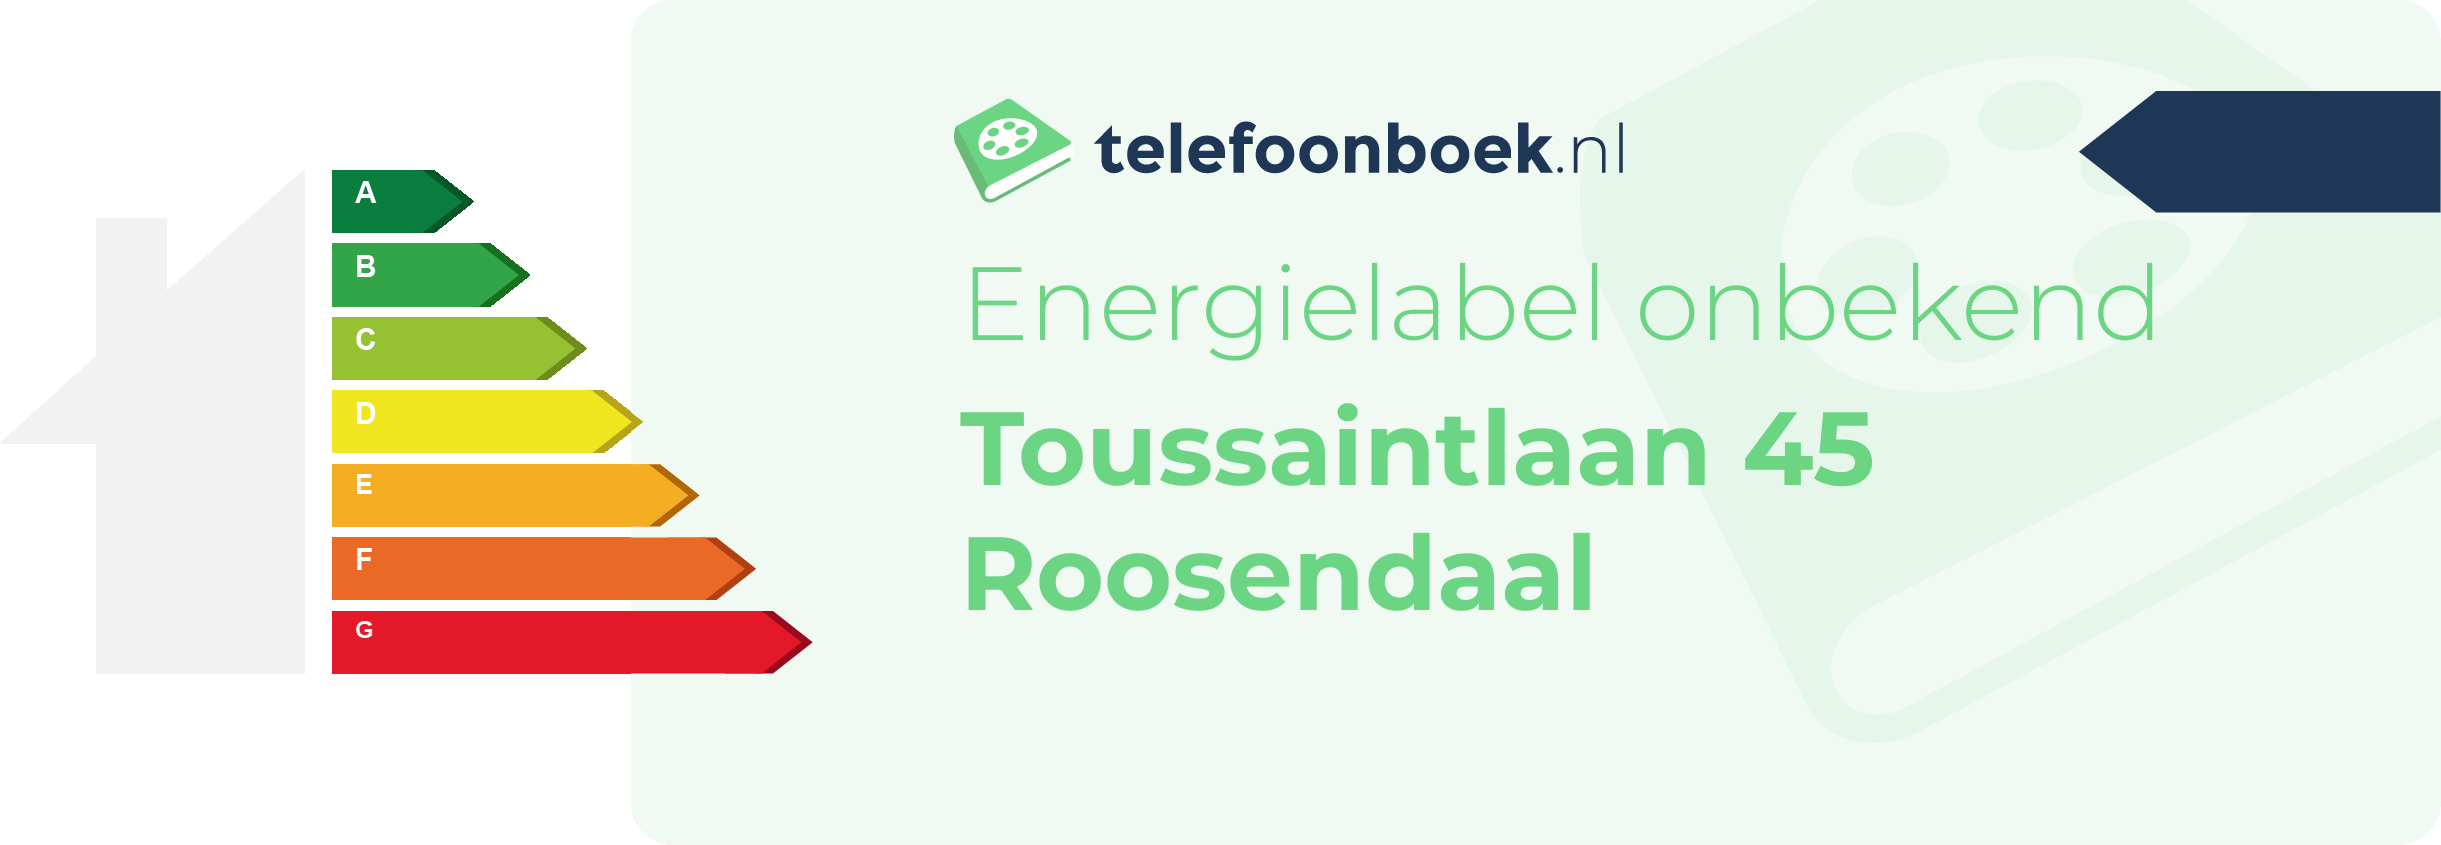 Energielabel Toussaintlaan 45 Roosendaal